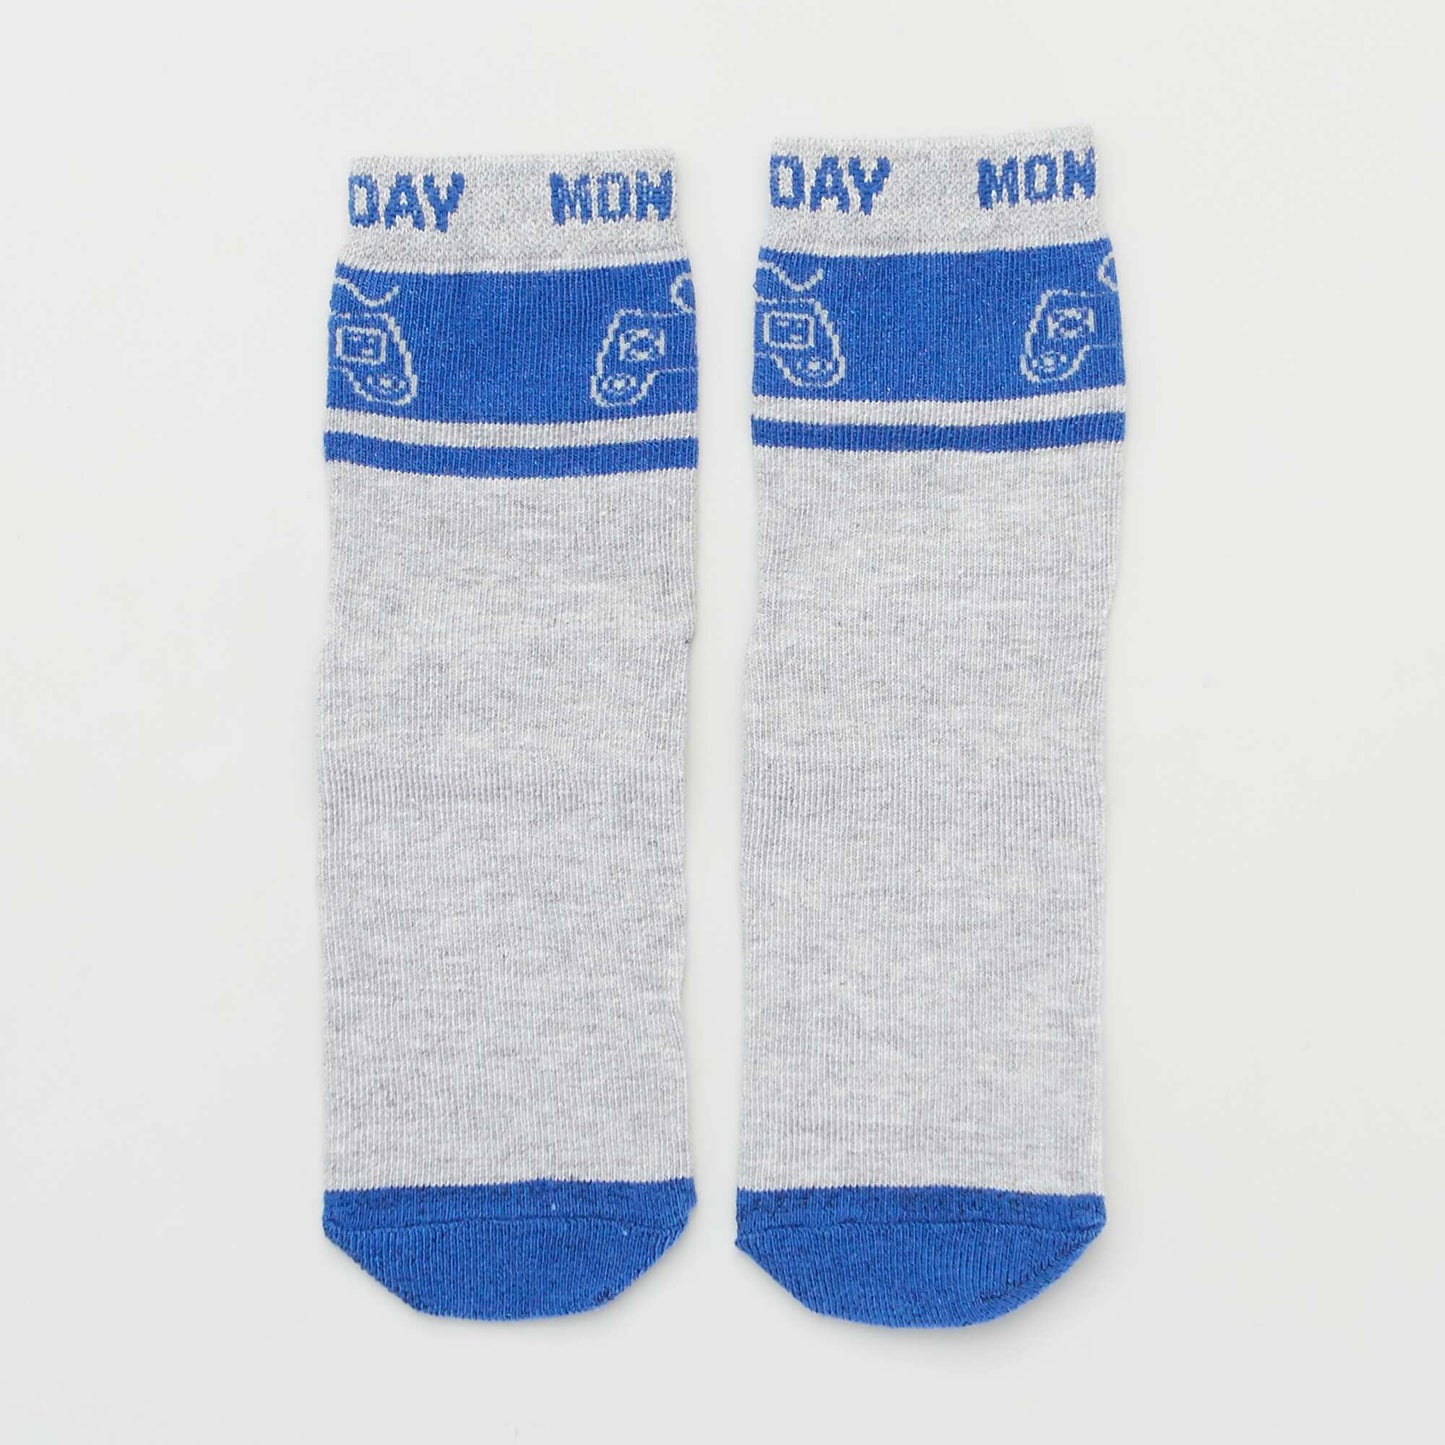 Pack of 5 pairs of 'days of the week' socks GREY